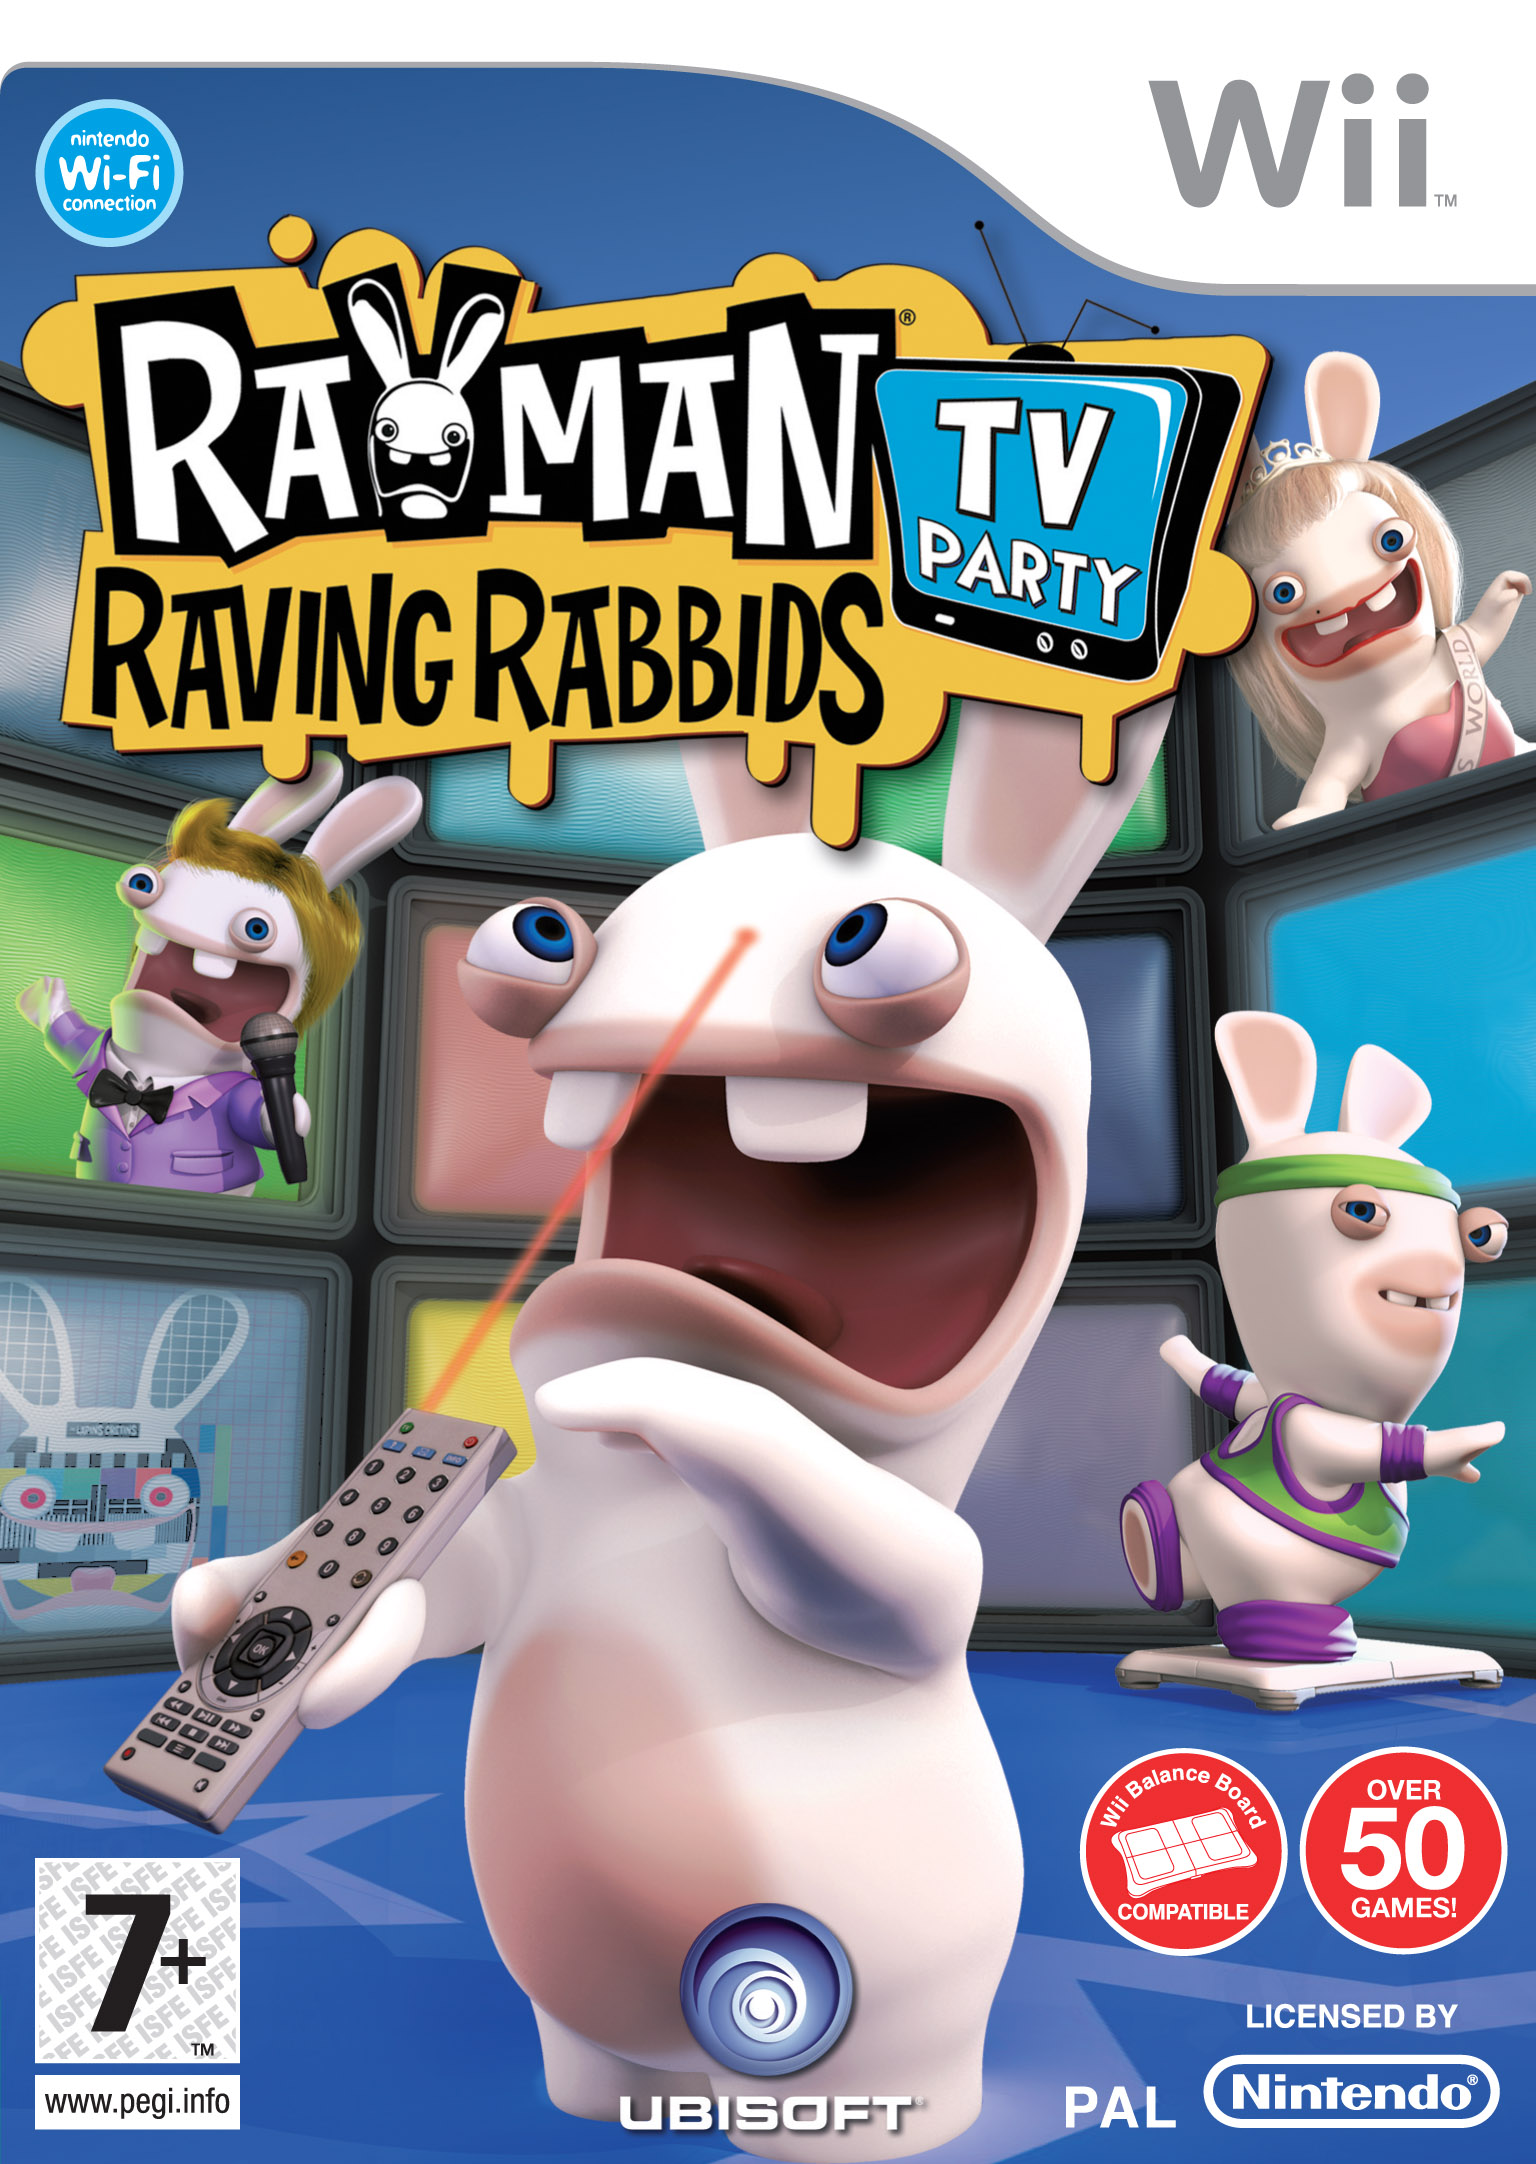 rayman raving rabbids tv party songs